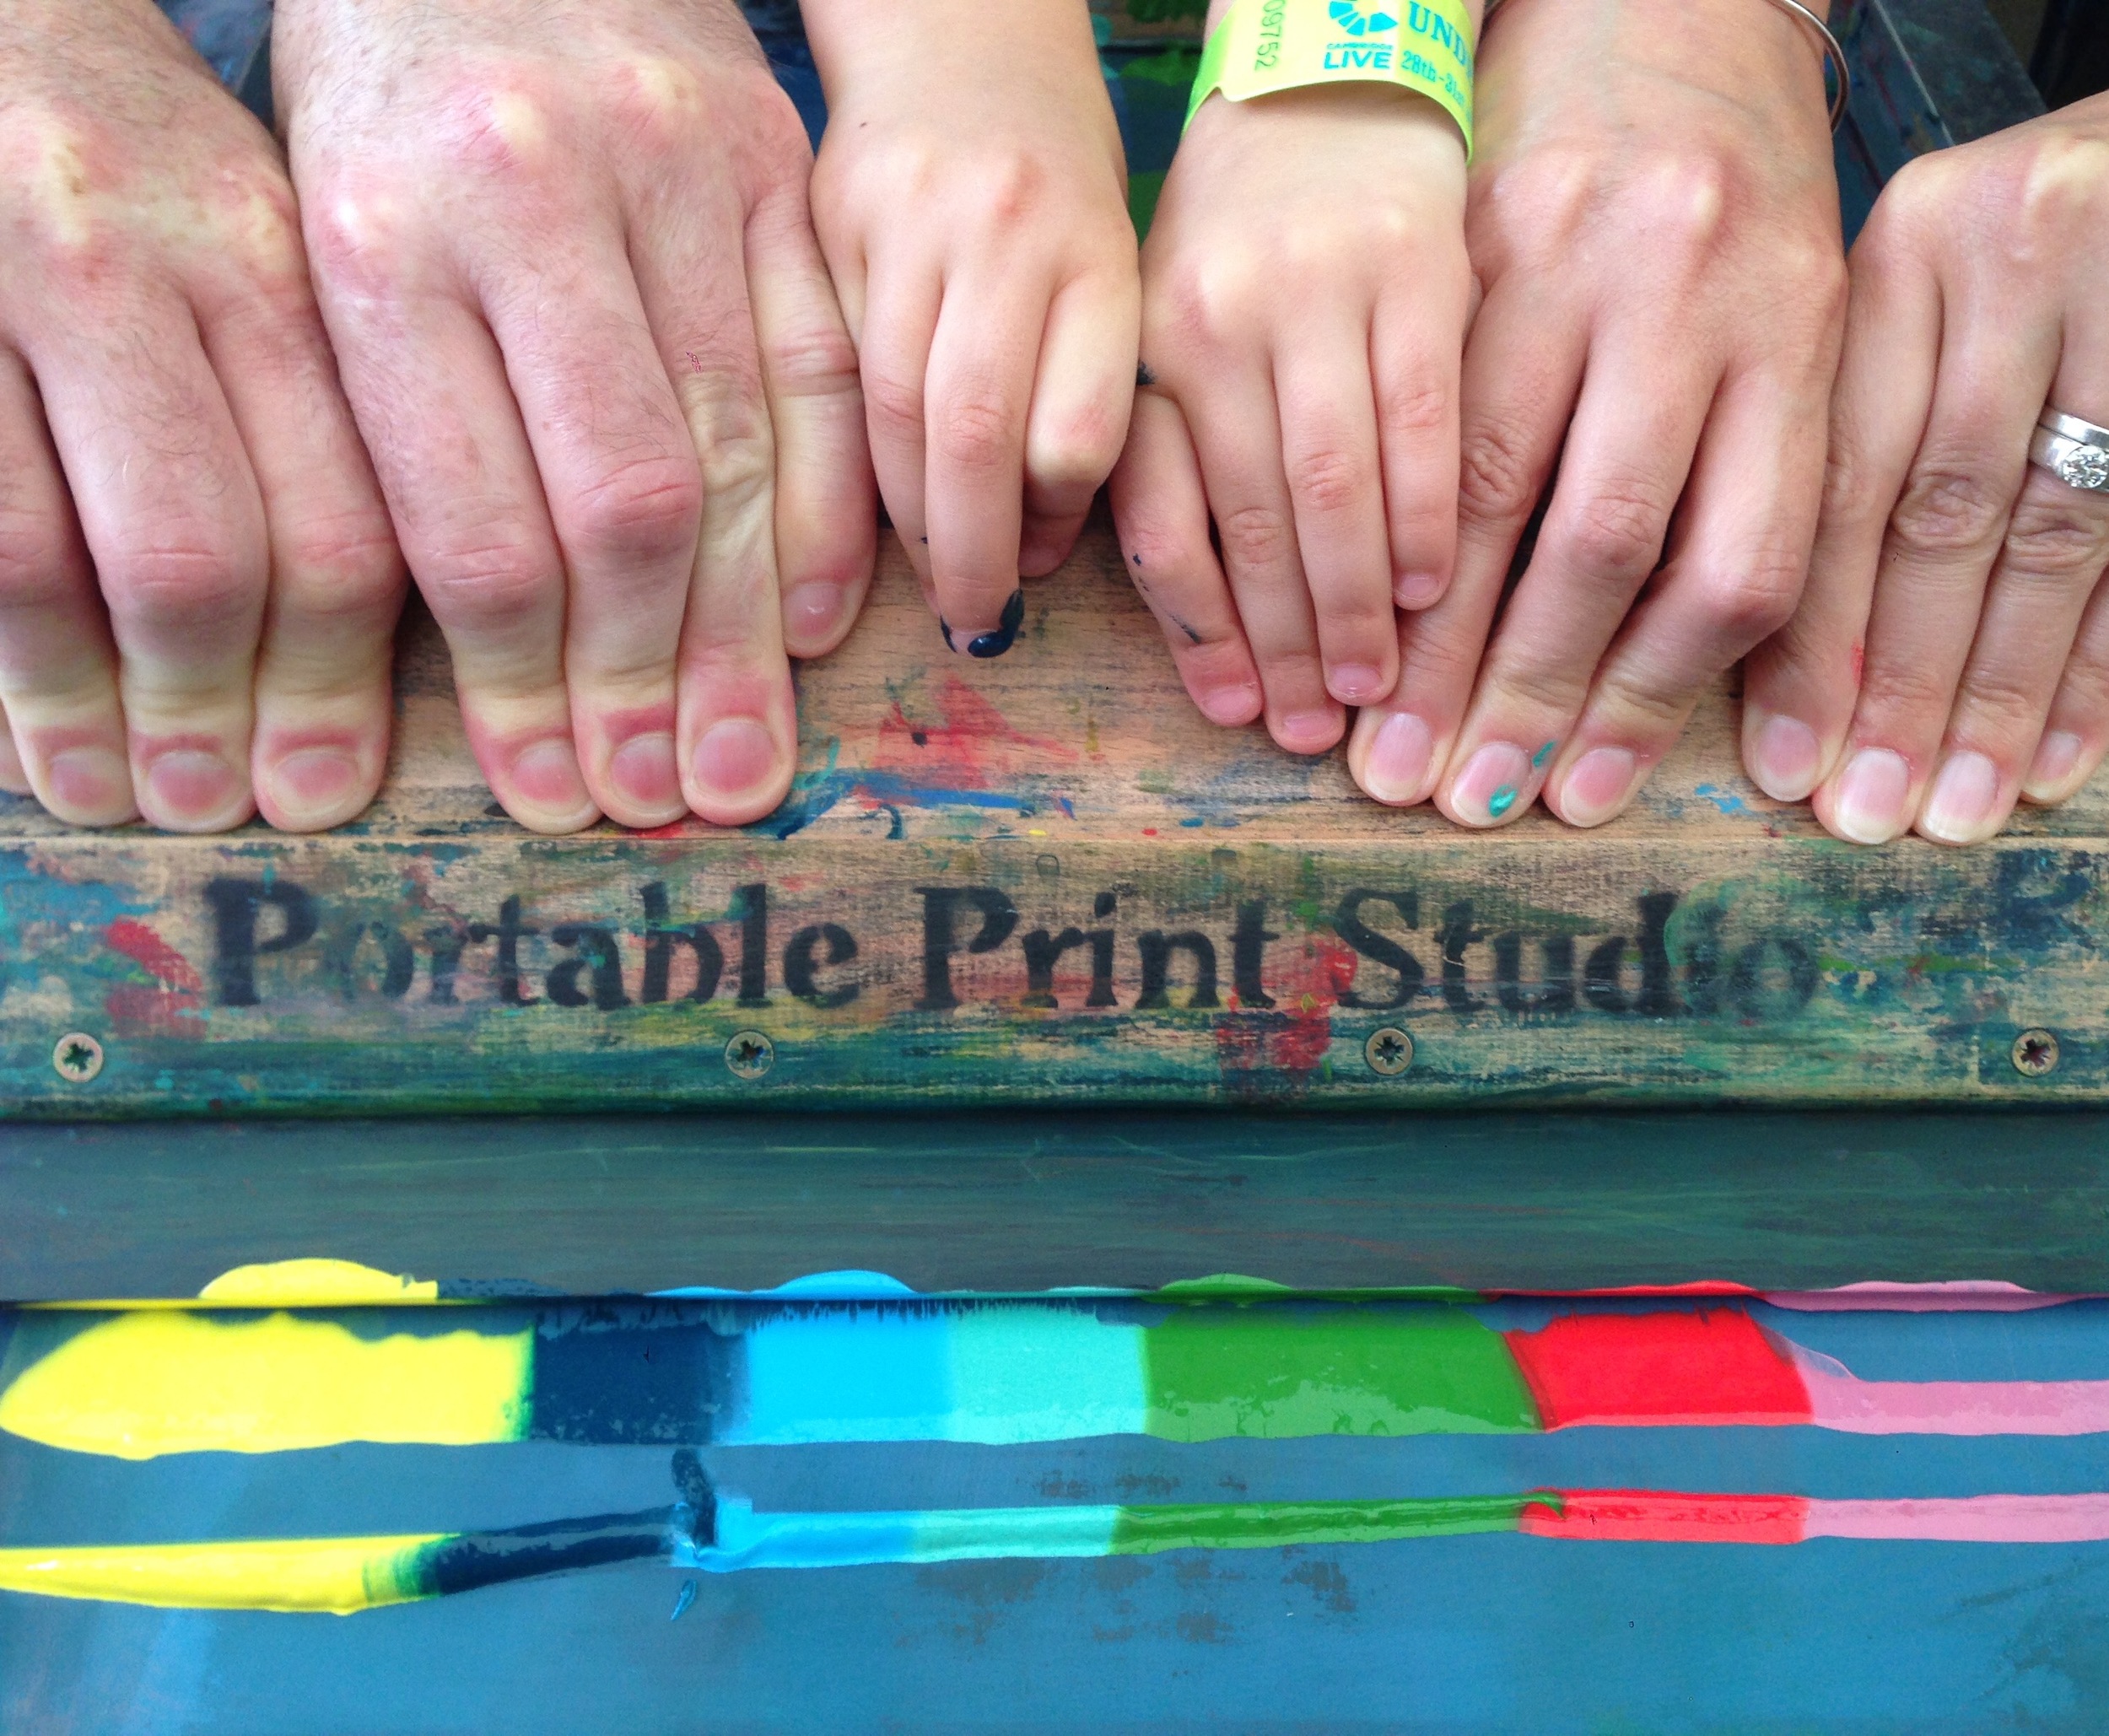 Portable Print Studio